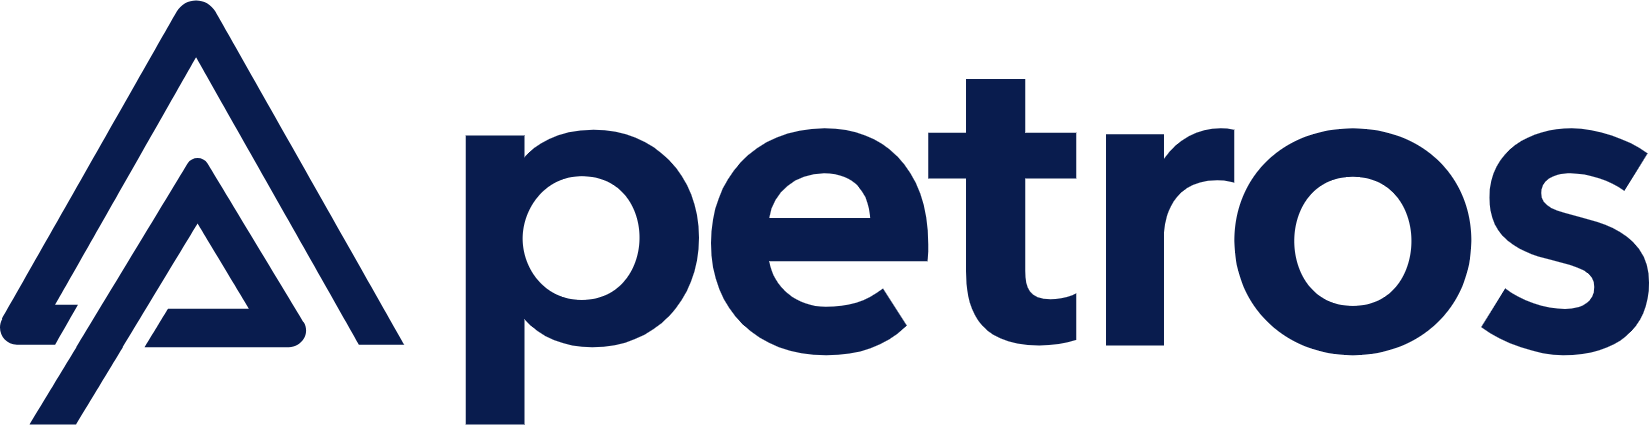 Petros Pharmaceuticals logo large (transparent PNG)